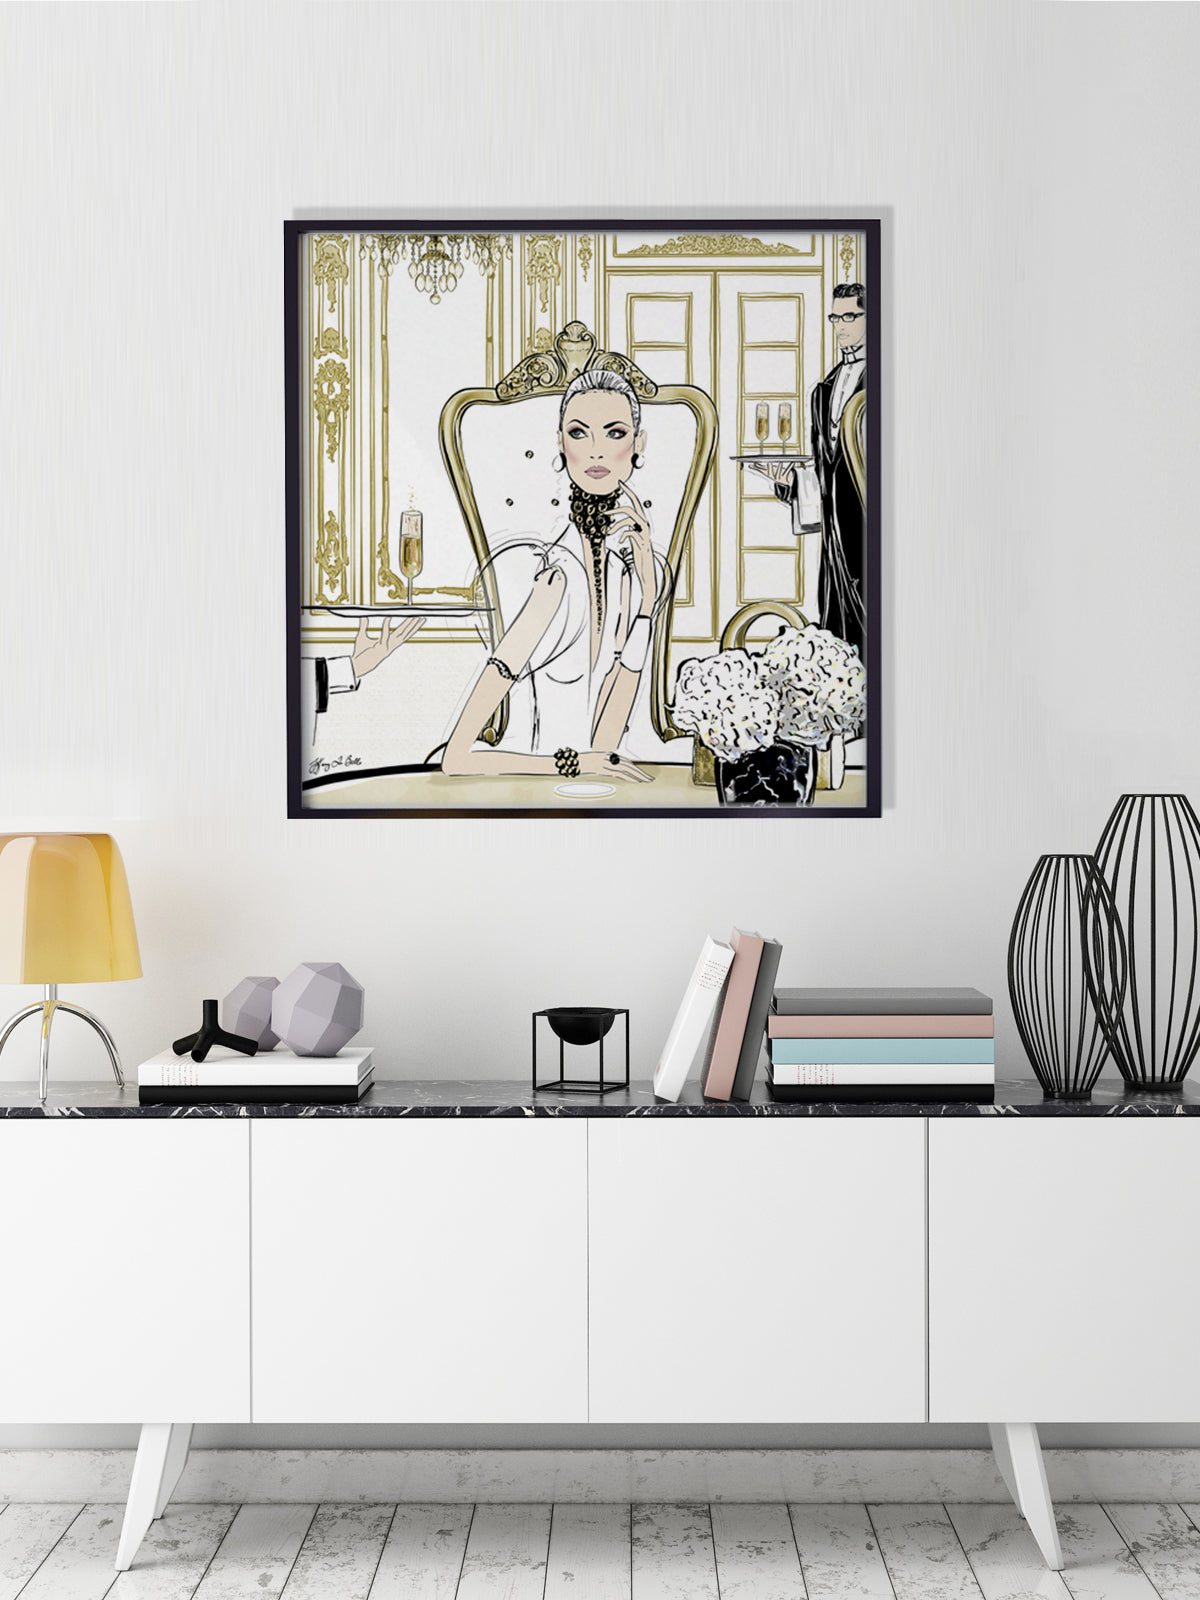 Champagne Dining - Illustration - Limited Edition Print - Tiffany La Belle